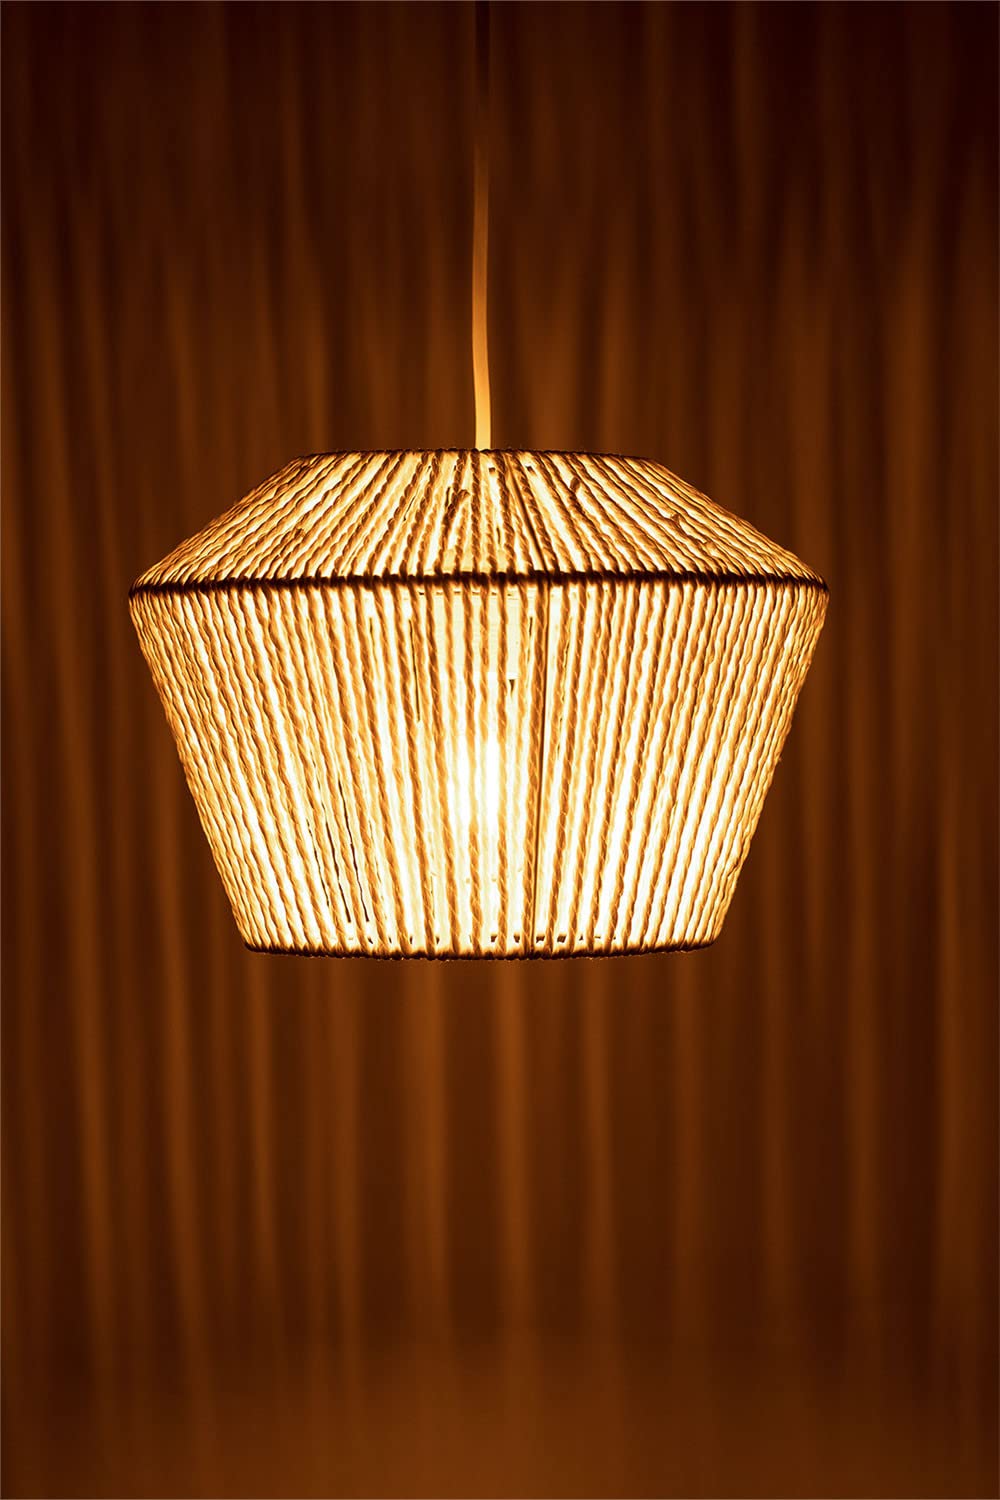 AKWAY Rattan Seagrass Paper Raffia Kauna Grass Wicker Lamp Premium Ceiling Light/Pendant Light Handwoven - 1 Piece (12" Dia x 9'H) (Beige) (Bulb not Included) - Akway